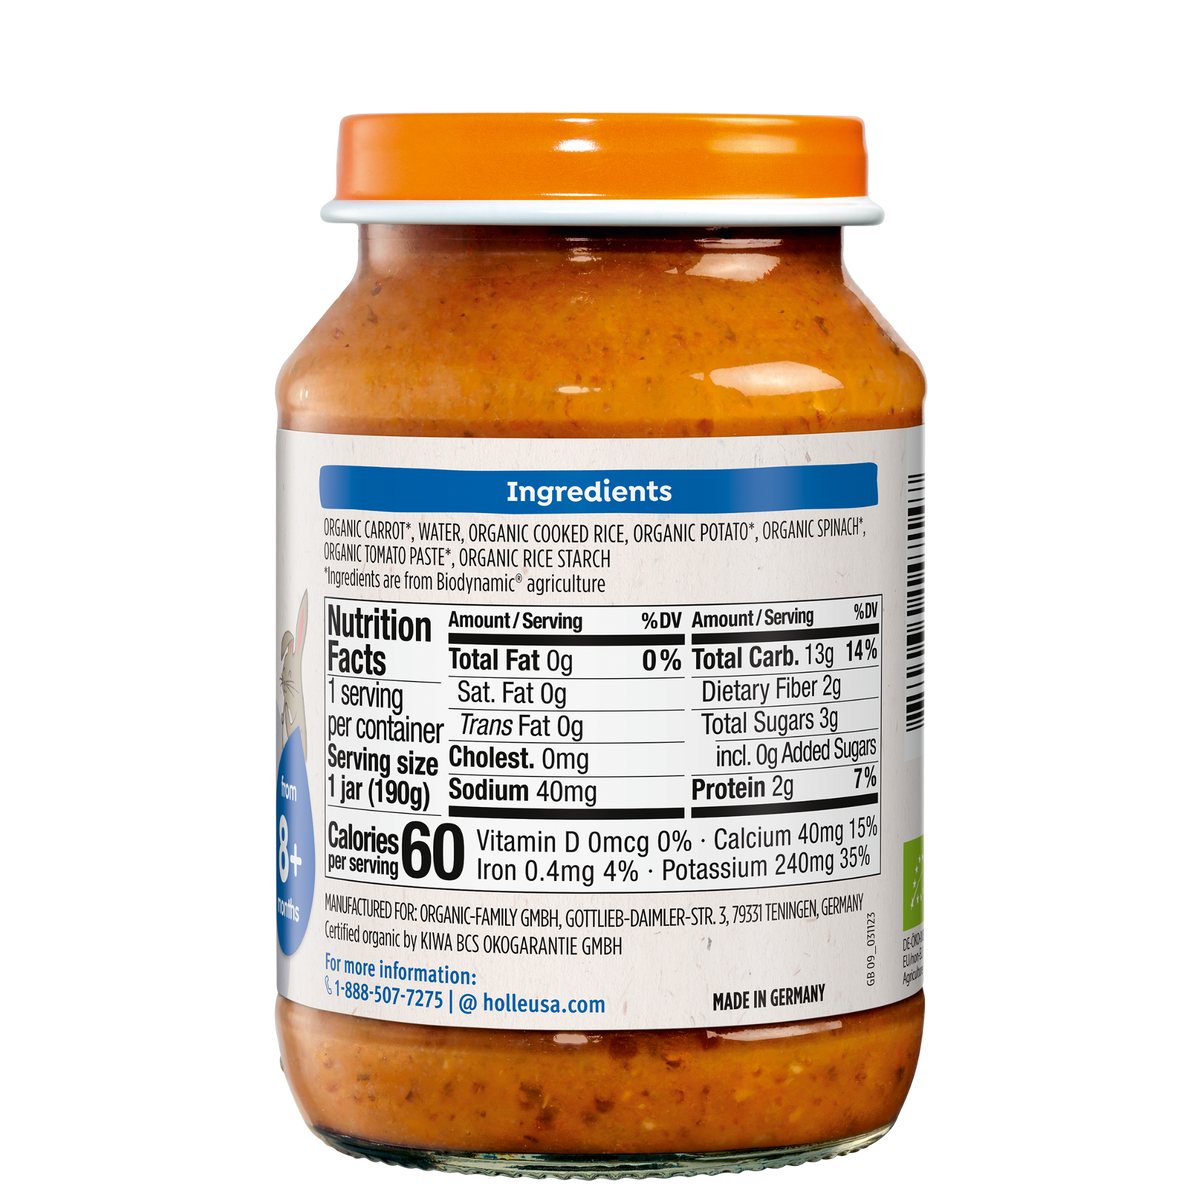 Holle Baby Food Jars - Veggie Risotto - 6 Jars